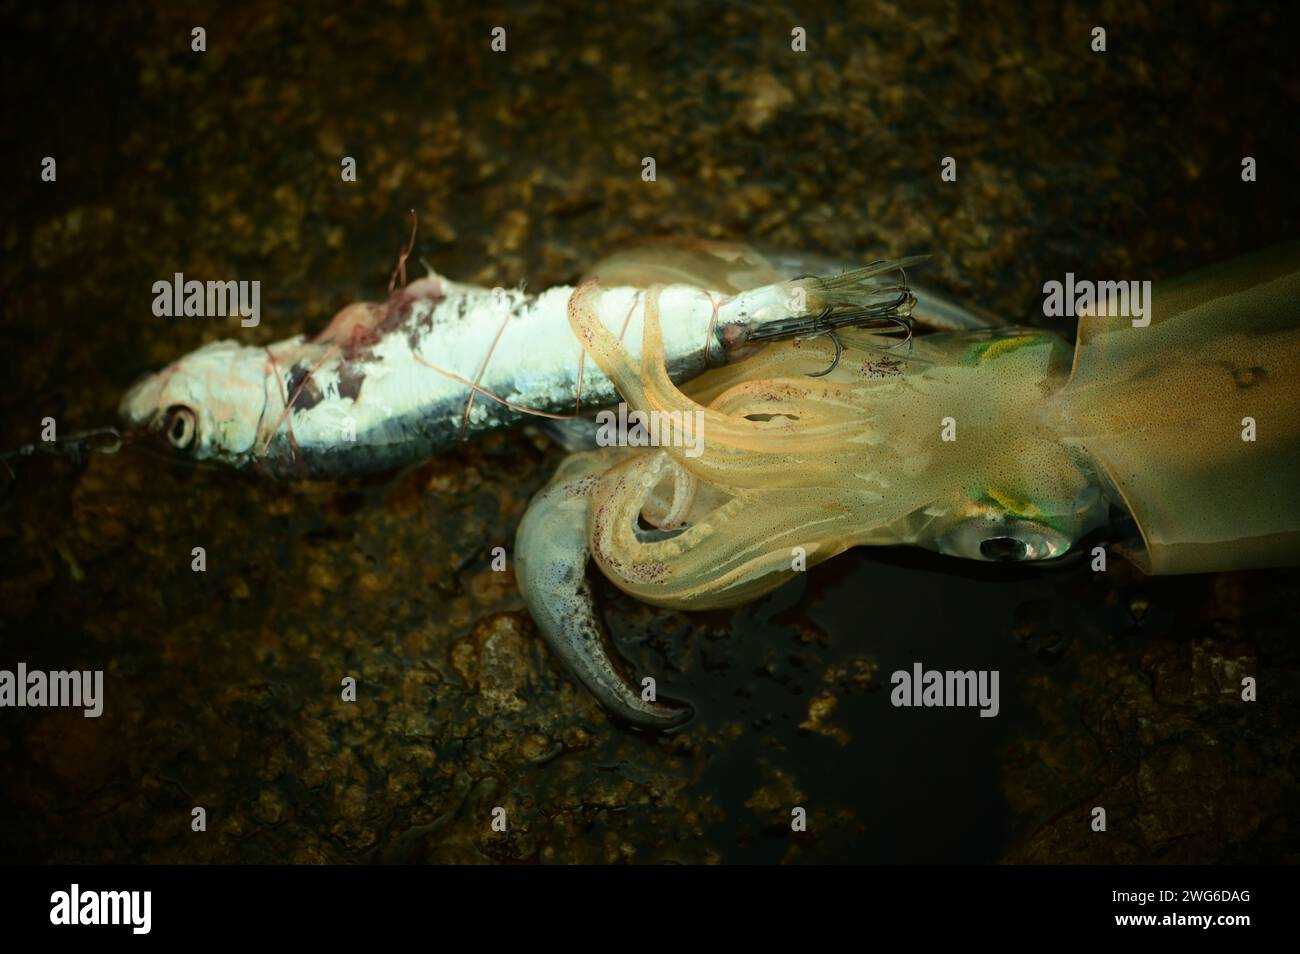 European squid or common squid (Loligo vulgaris) caught by spin fishing with frozen anchovies (Engraulis encrasicolus), Greece, North Aegean region Stock Photo